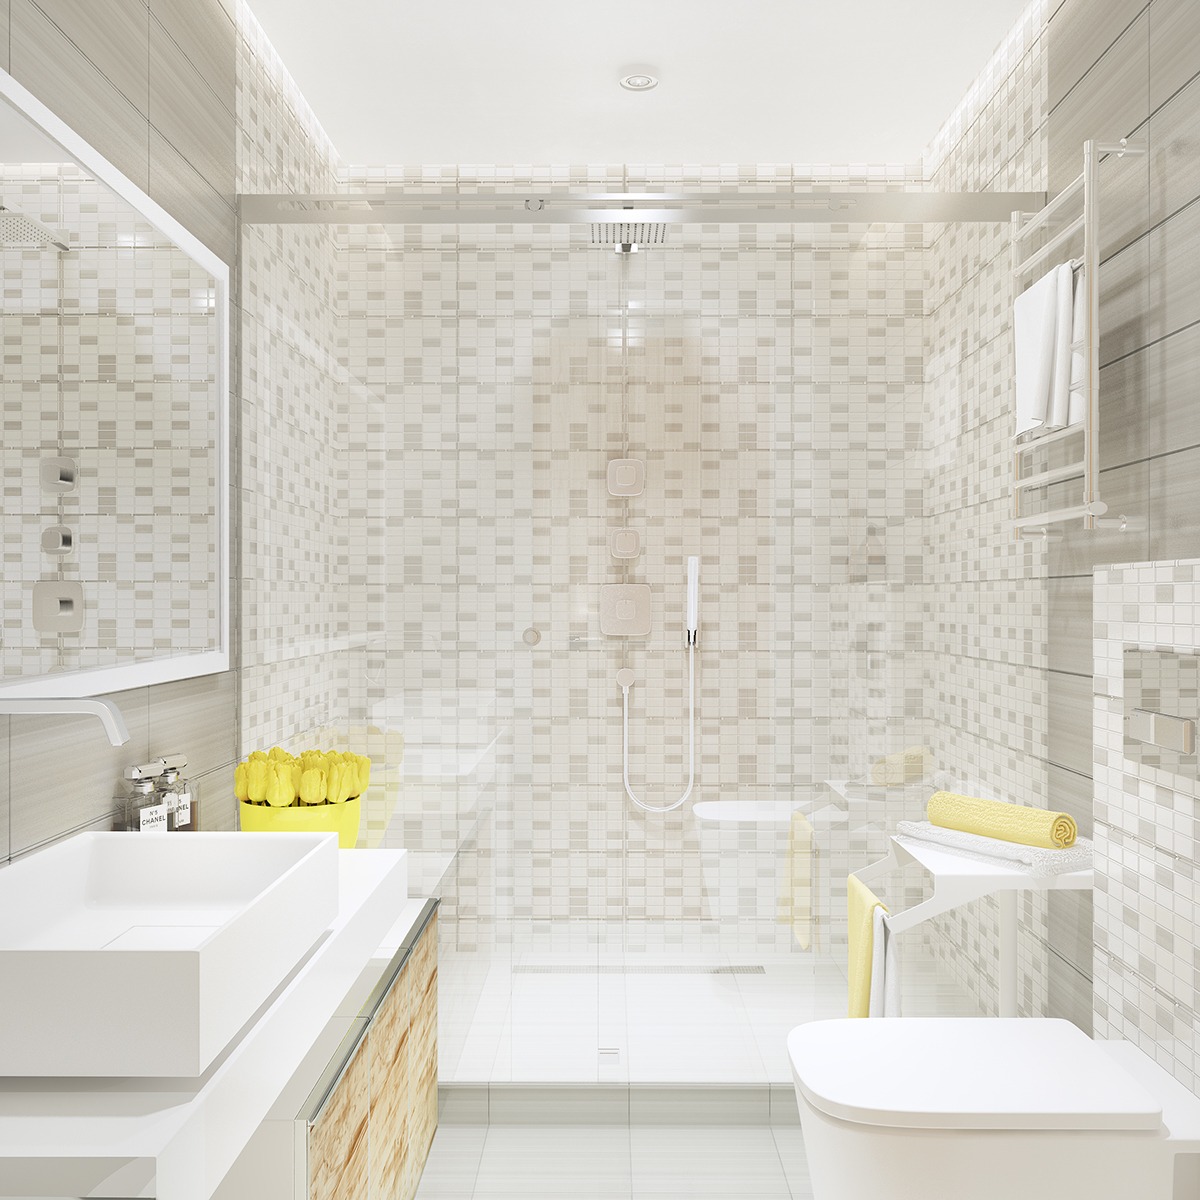 white tile bathroom design "width =" 1200 "height =" 1200 "srcset =" https://mileray.com/wp-content/uploads/2020/05/1588516236_911_Minimalist-Bathroom-Designs-Looks-So-Trendy-With-Backsplash-and-Wooden.jpg 1200w , https://mileray.com/wp-content/uploads/2016/09/gray-tile-bathroom-Juliya-Butova-1-150x150.jpg 150w, https://mileray.com/wp-content/uploads/ 2016/09 / gray-tiles-bad-Juliya-Butova-1-300x300.jpg 300w, https://mileray.com/wp-content/uploads/2016/09/gray-tile-bathroom-Juliya-Butova-1 -768x768.jpg 768w, https://mileray.com/wp-content/uploads/2016/09/gray-tile-bathroom-Juliya-Butova-1-1024x1024.jpg 1024w, https://mileray.com/wp -content / uploads / 2016/09 / grau-fliesen-bad-Juliya-Butova-1-696x696.jpg 696w, https://mileray.com/wp-content/uploads/2016/09/gray-tile-bathroom- Juliya-Butova-1-1068x1068.jpg 1068w, https://mileray.com/wp-content/uploads/2016/09/gray-tile-bathroom-Juliya-Butova-1-420x420.jpg 420w "Sizes =" ( maximum width: 1200px) 100vw, 1200px